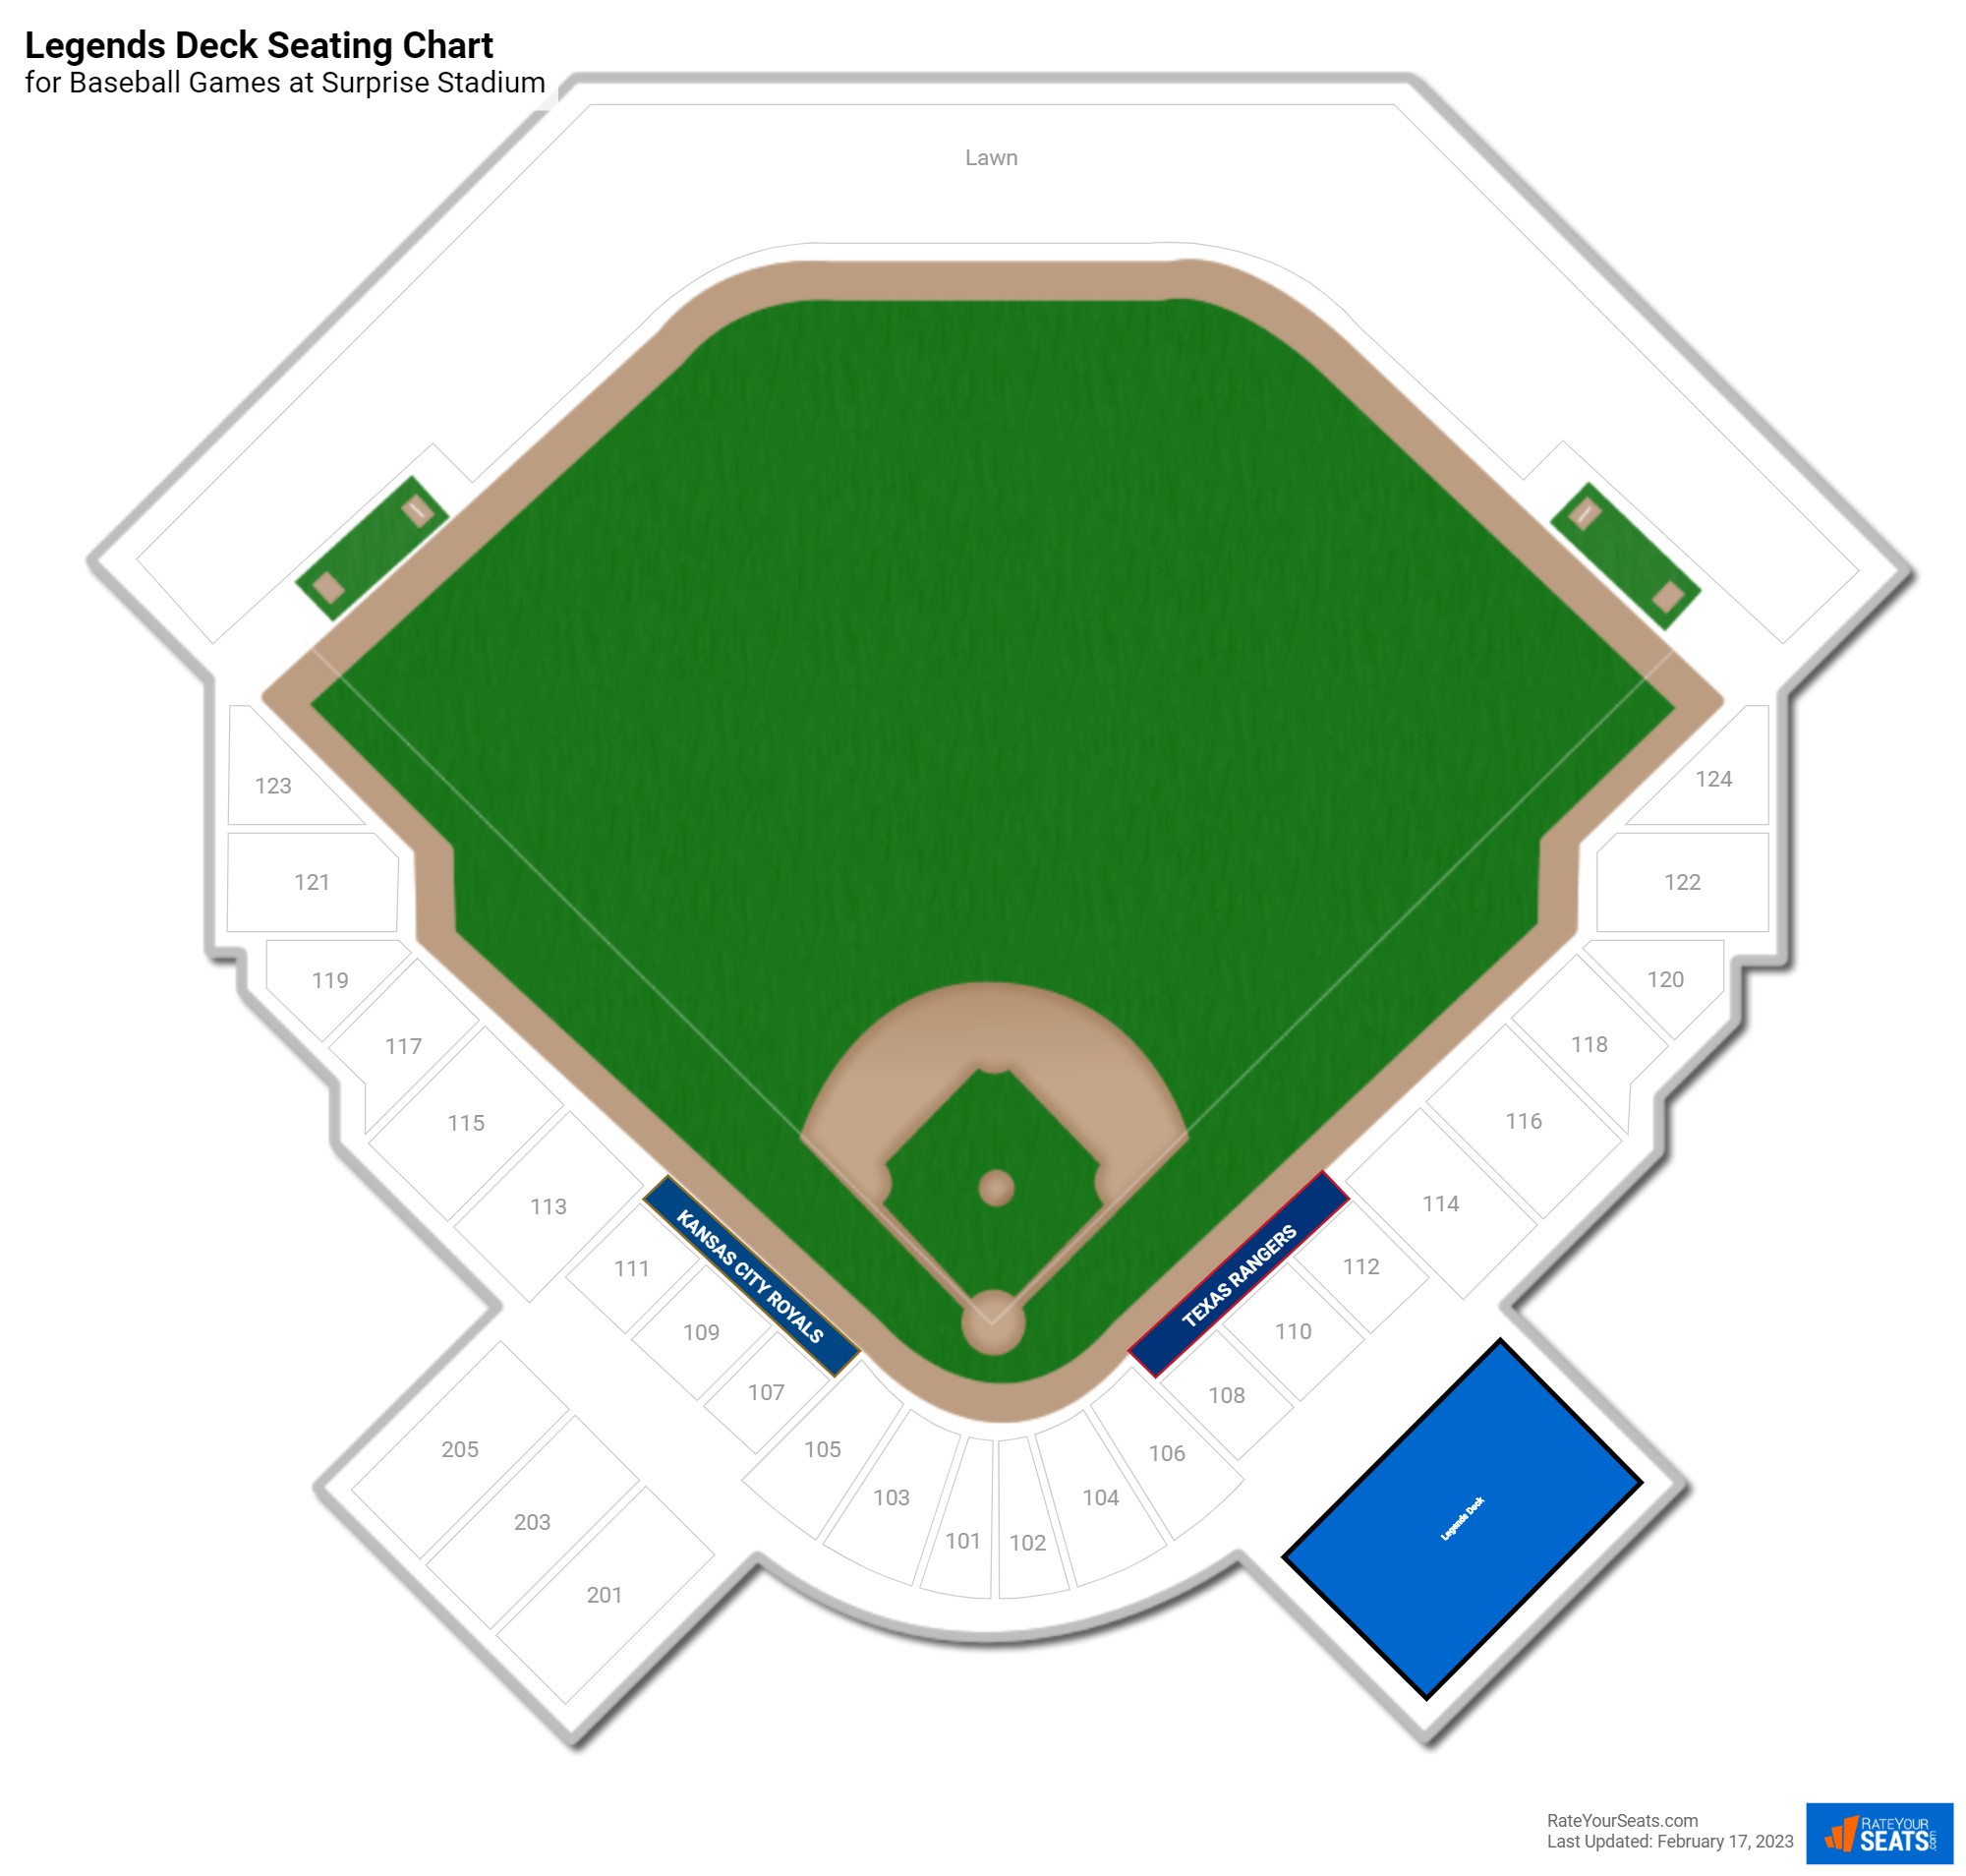 Baseball Legends Deck Seating Chart at Surprise Stadium